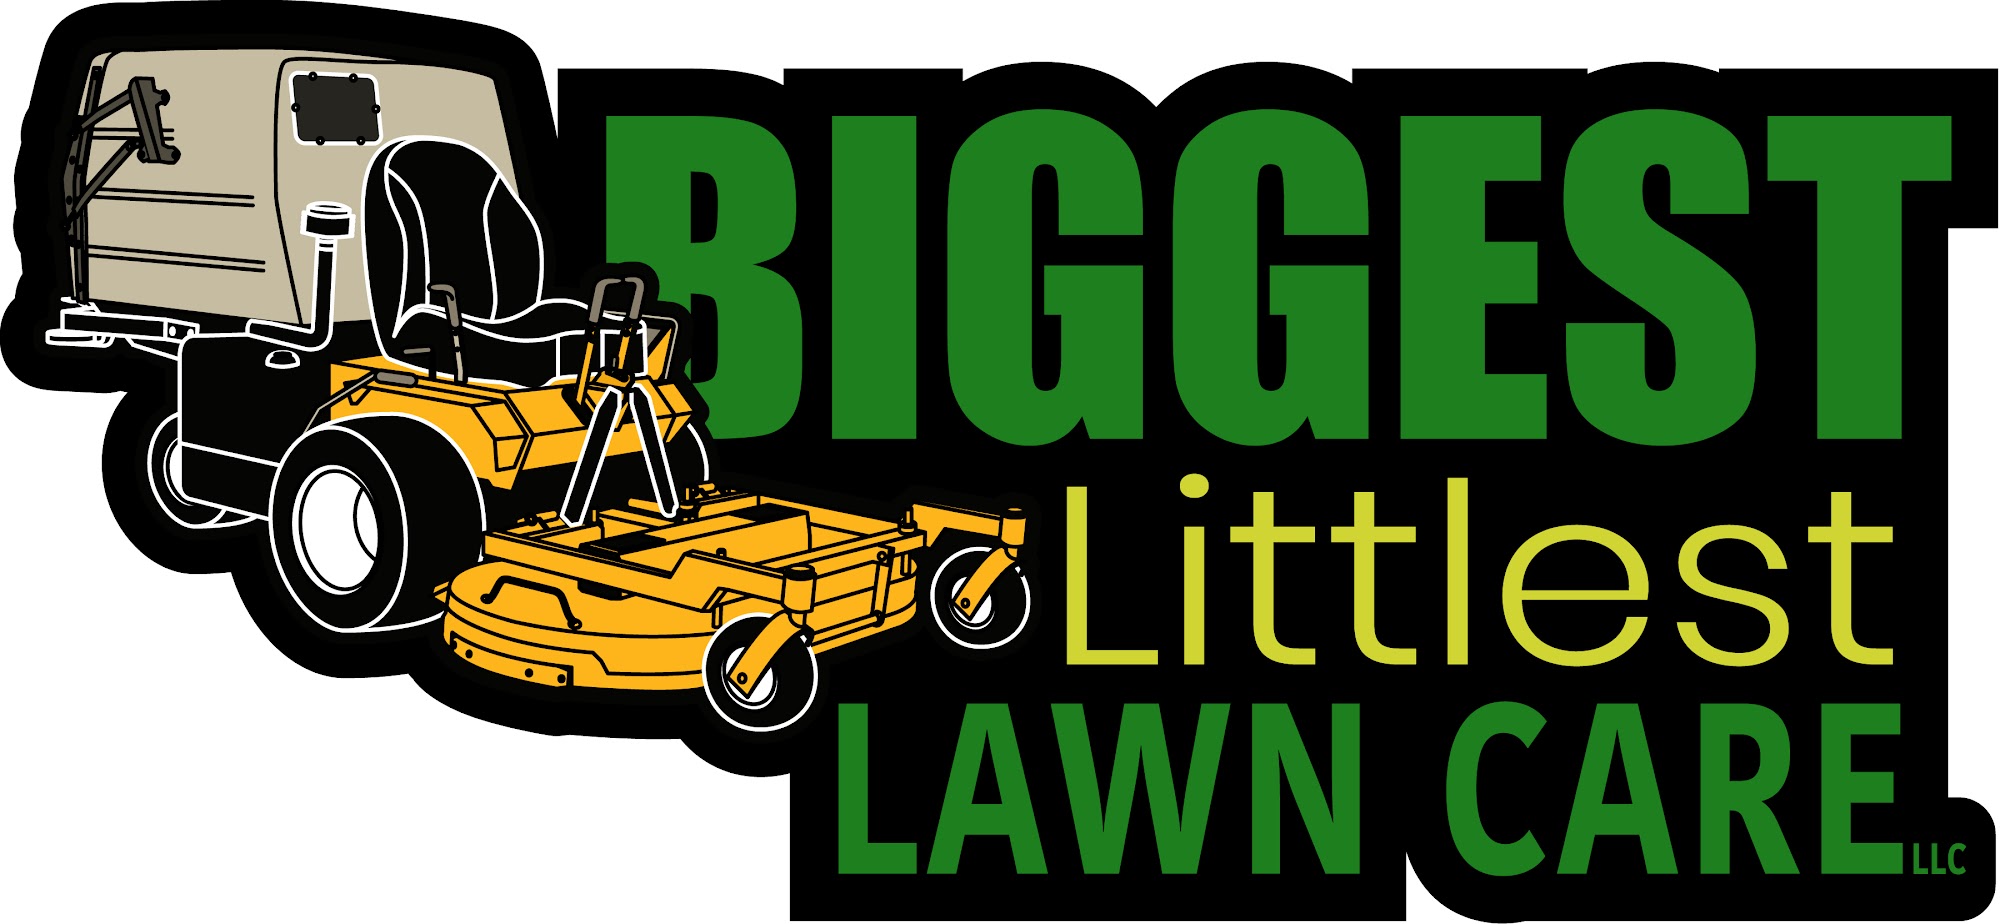 Biggest Littlest Lawn Care LLC Halstead Kansas 